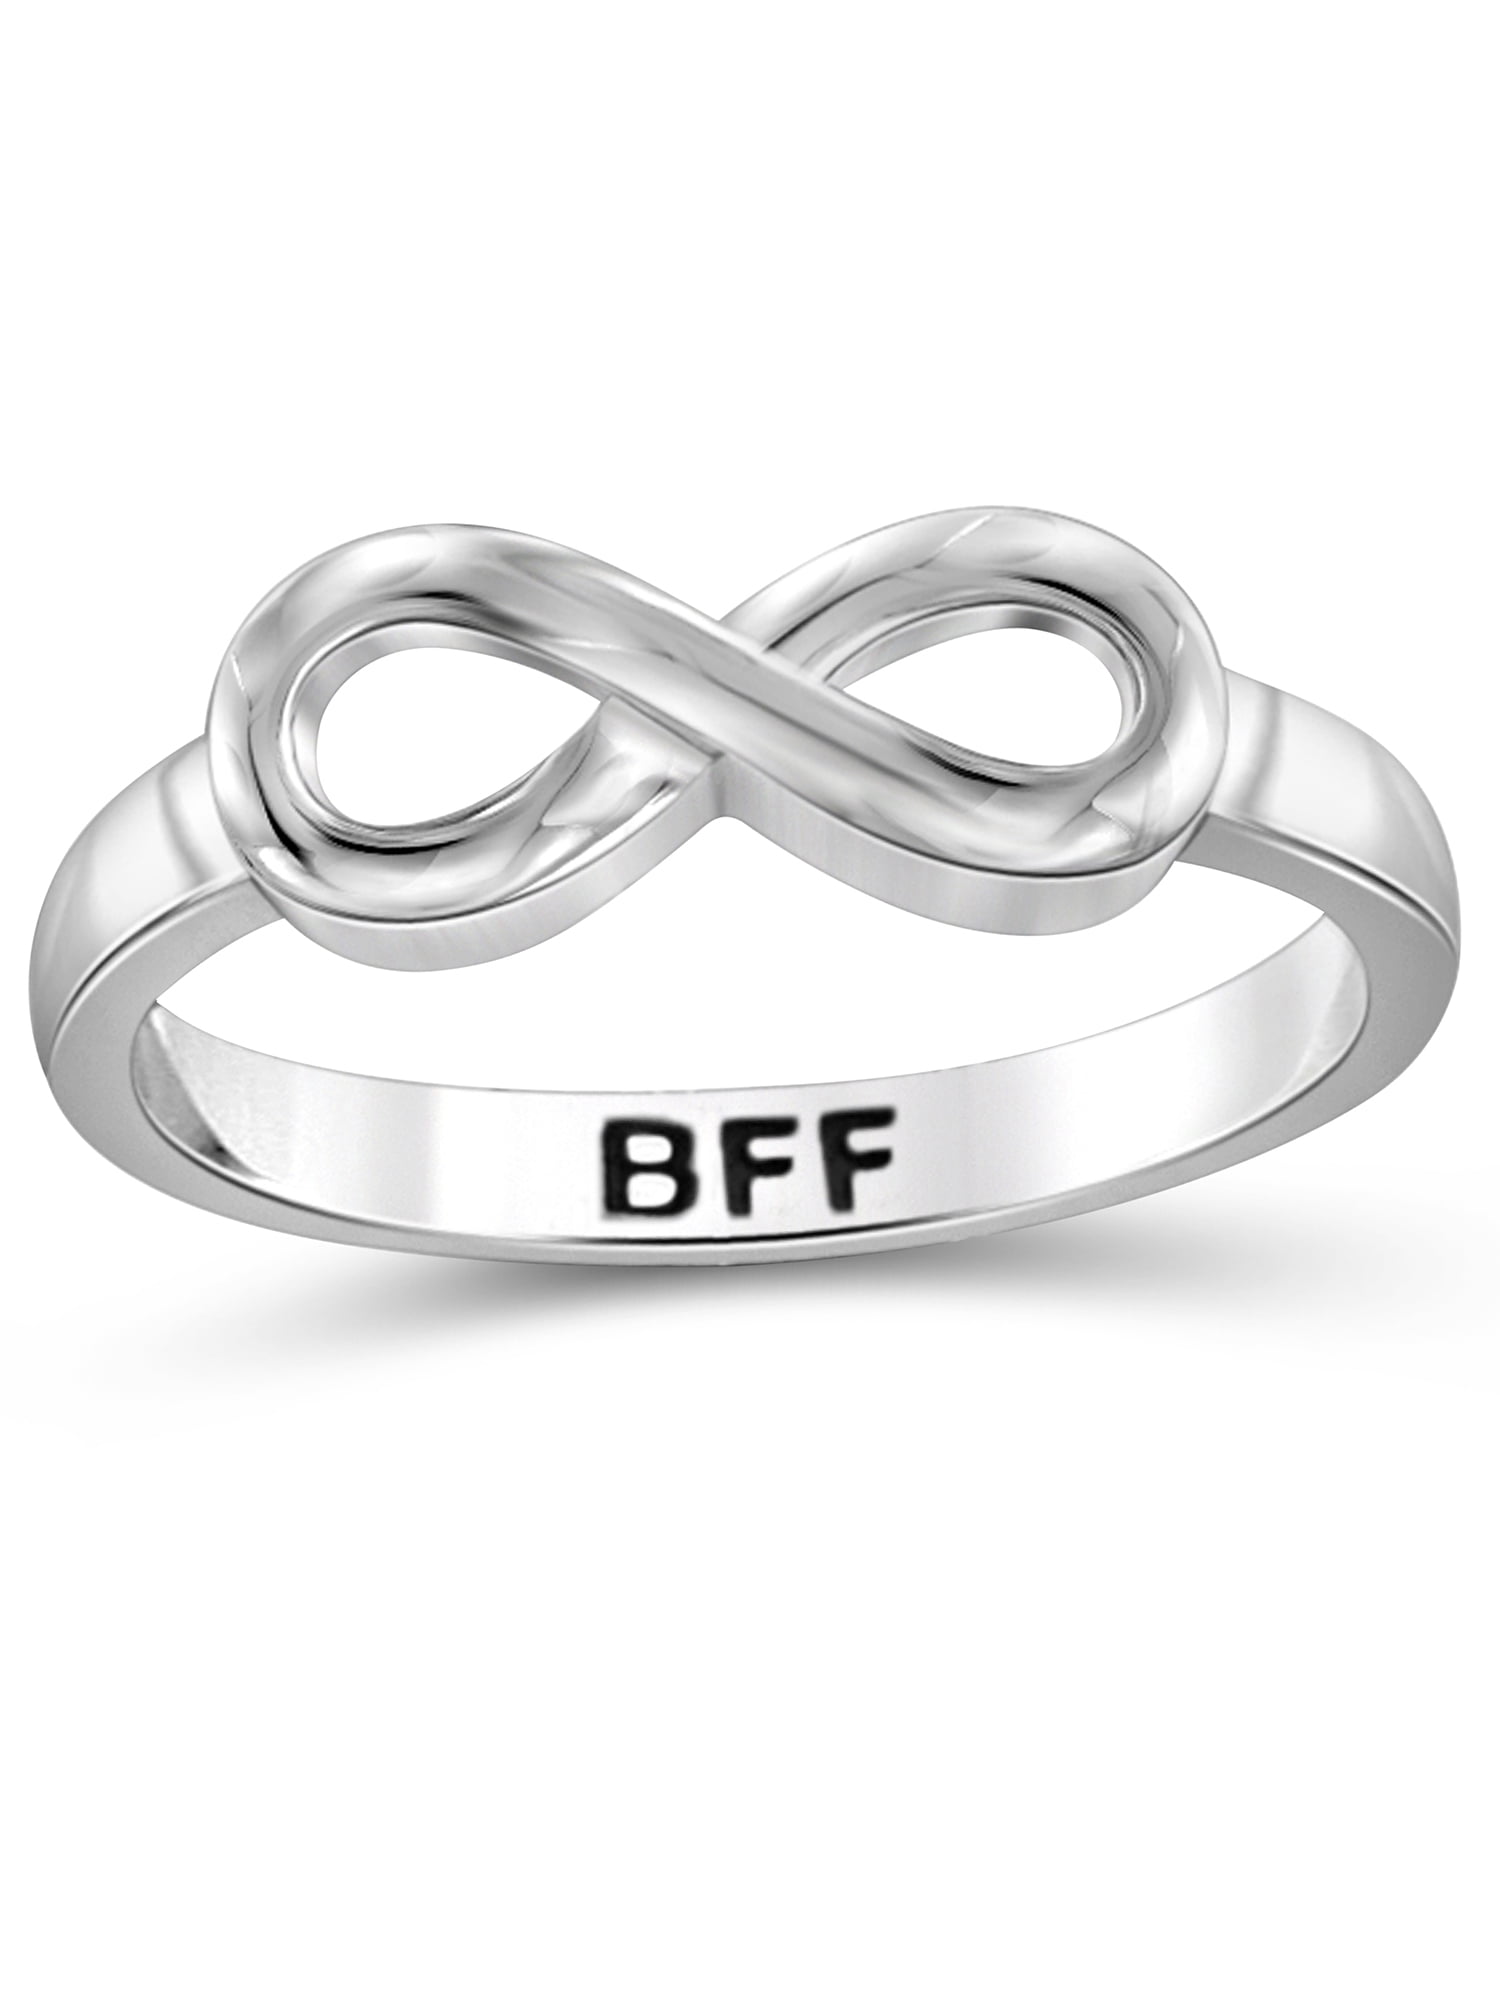 White Fire Opal Silver Jewelry Anniversary Women Infinity Ring Size 6 7 8 9  10 | eBay